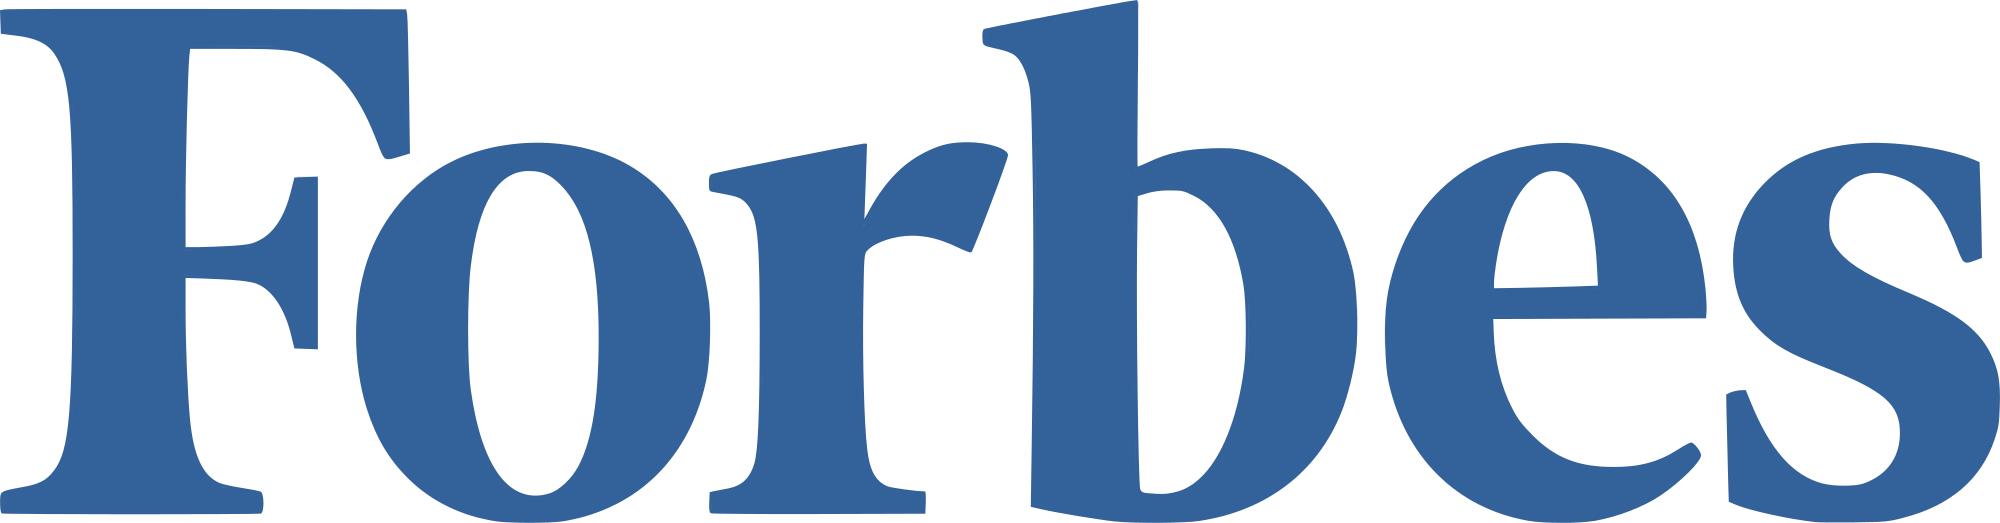 Forbes_logo.svg 2